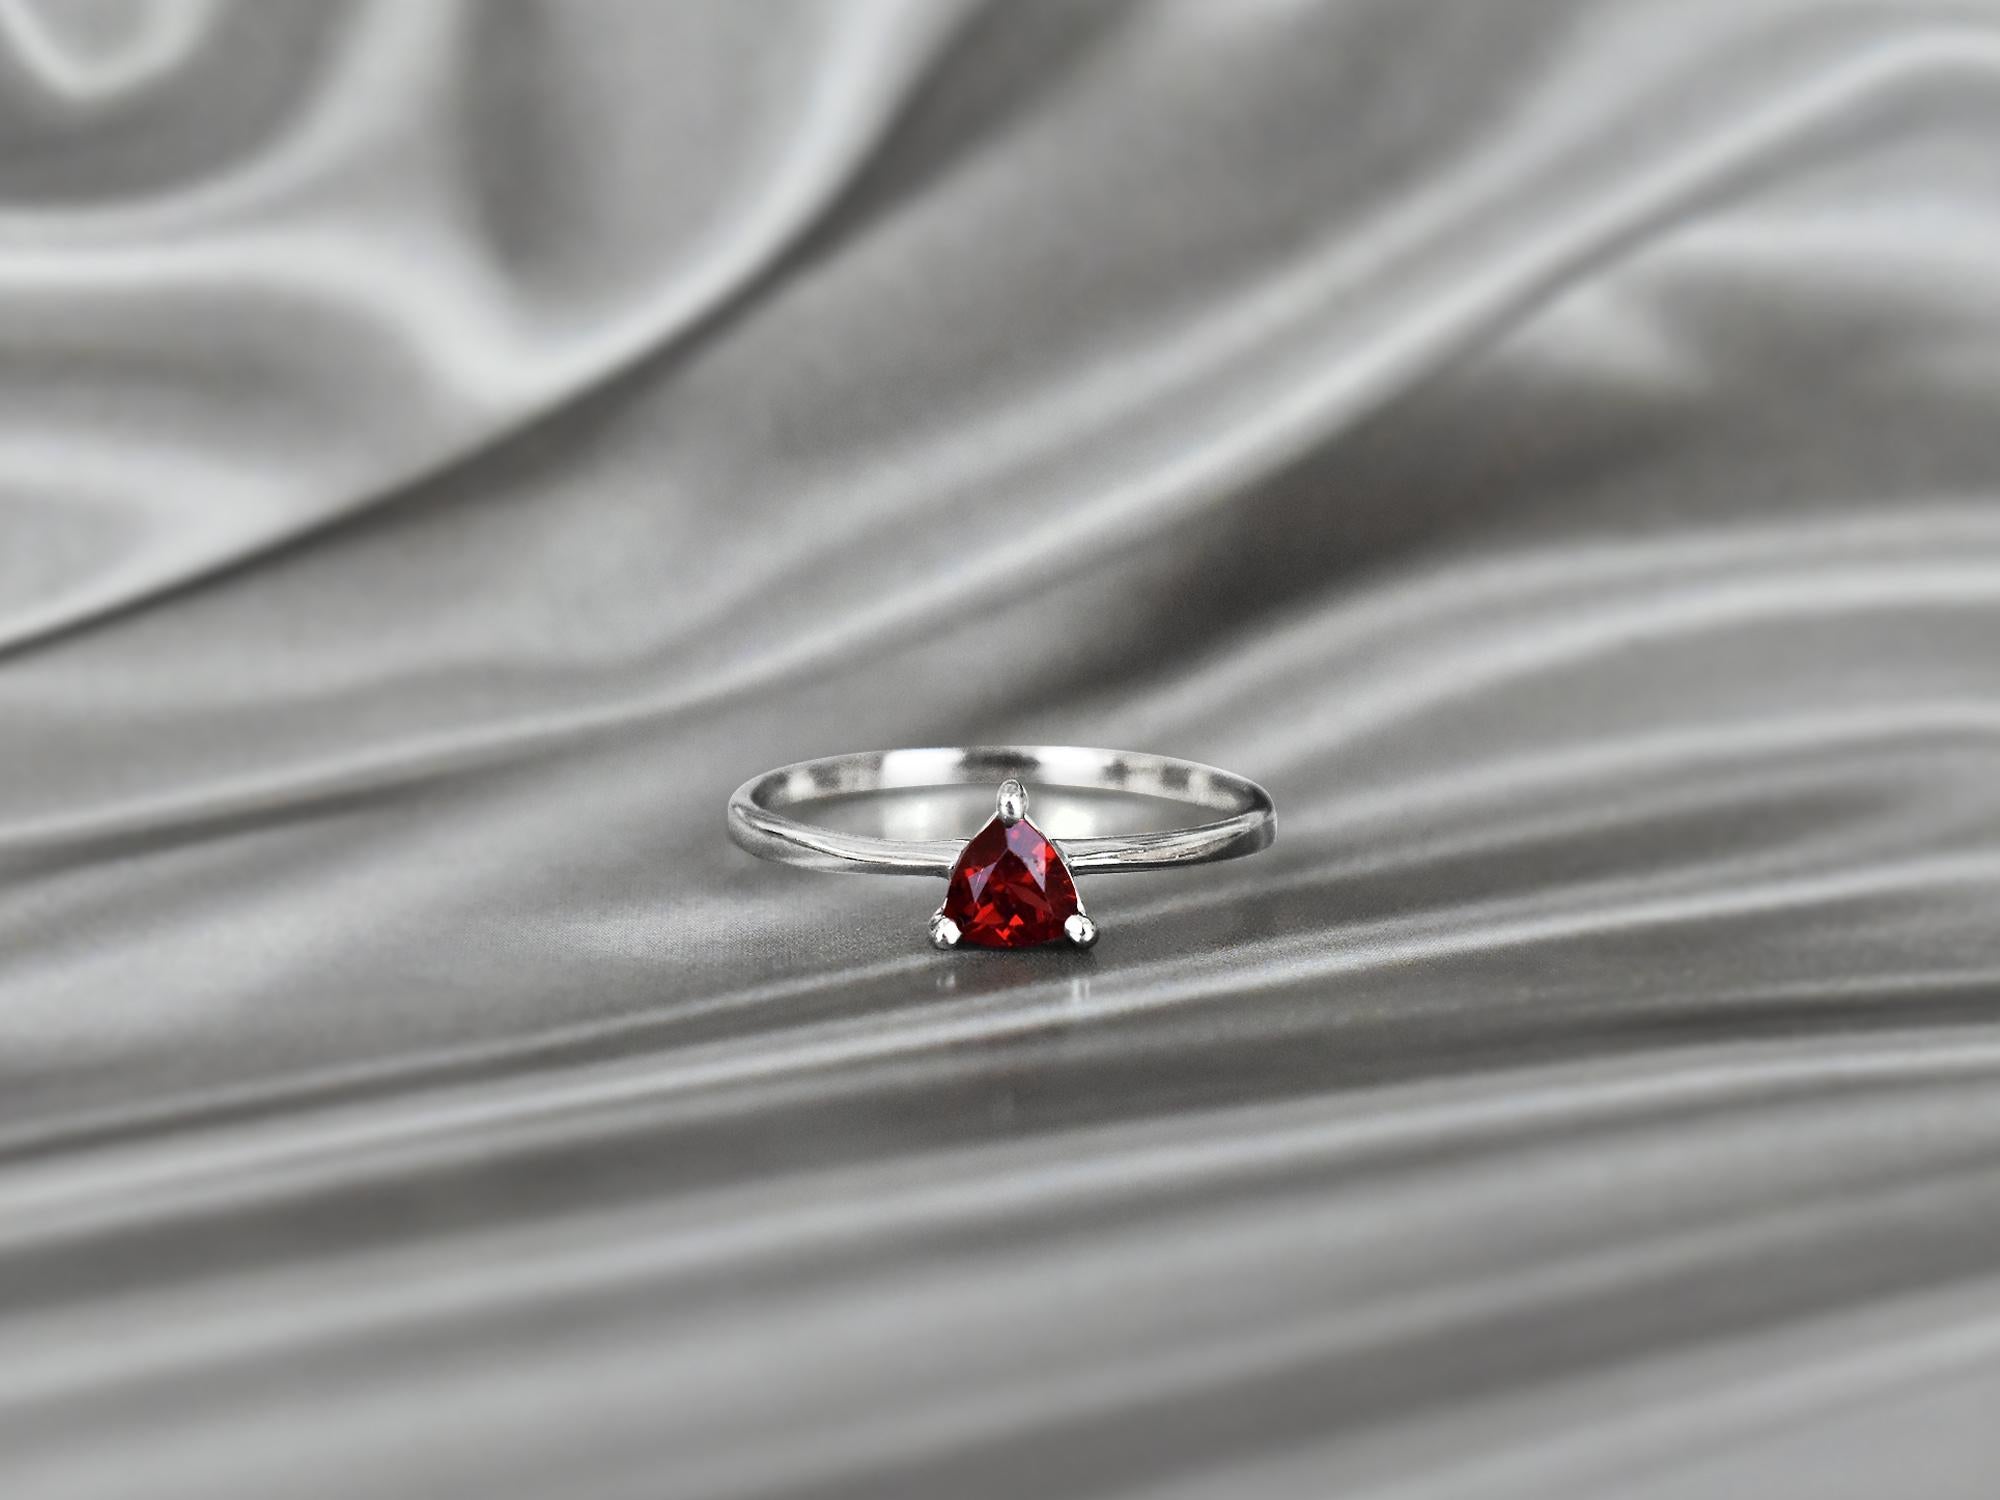 For Sale:  14k Gold Trillion Gemstone 6 mm Trillion Gemstone Engagement Ring Stackable Ring 4